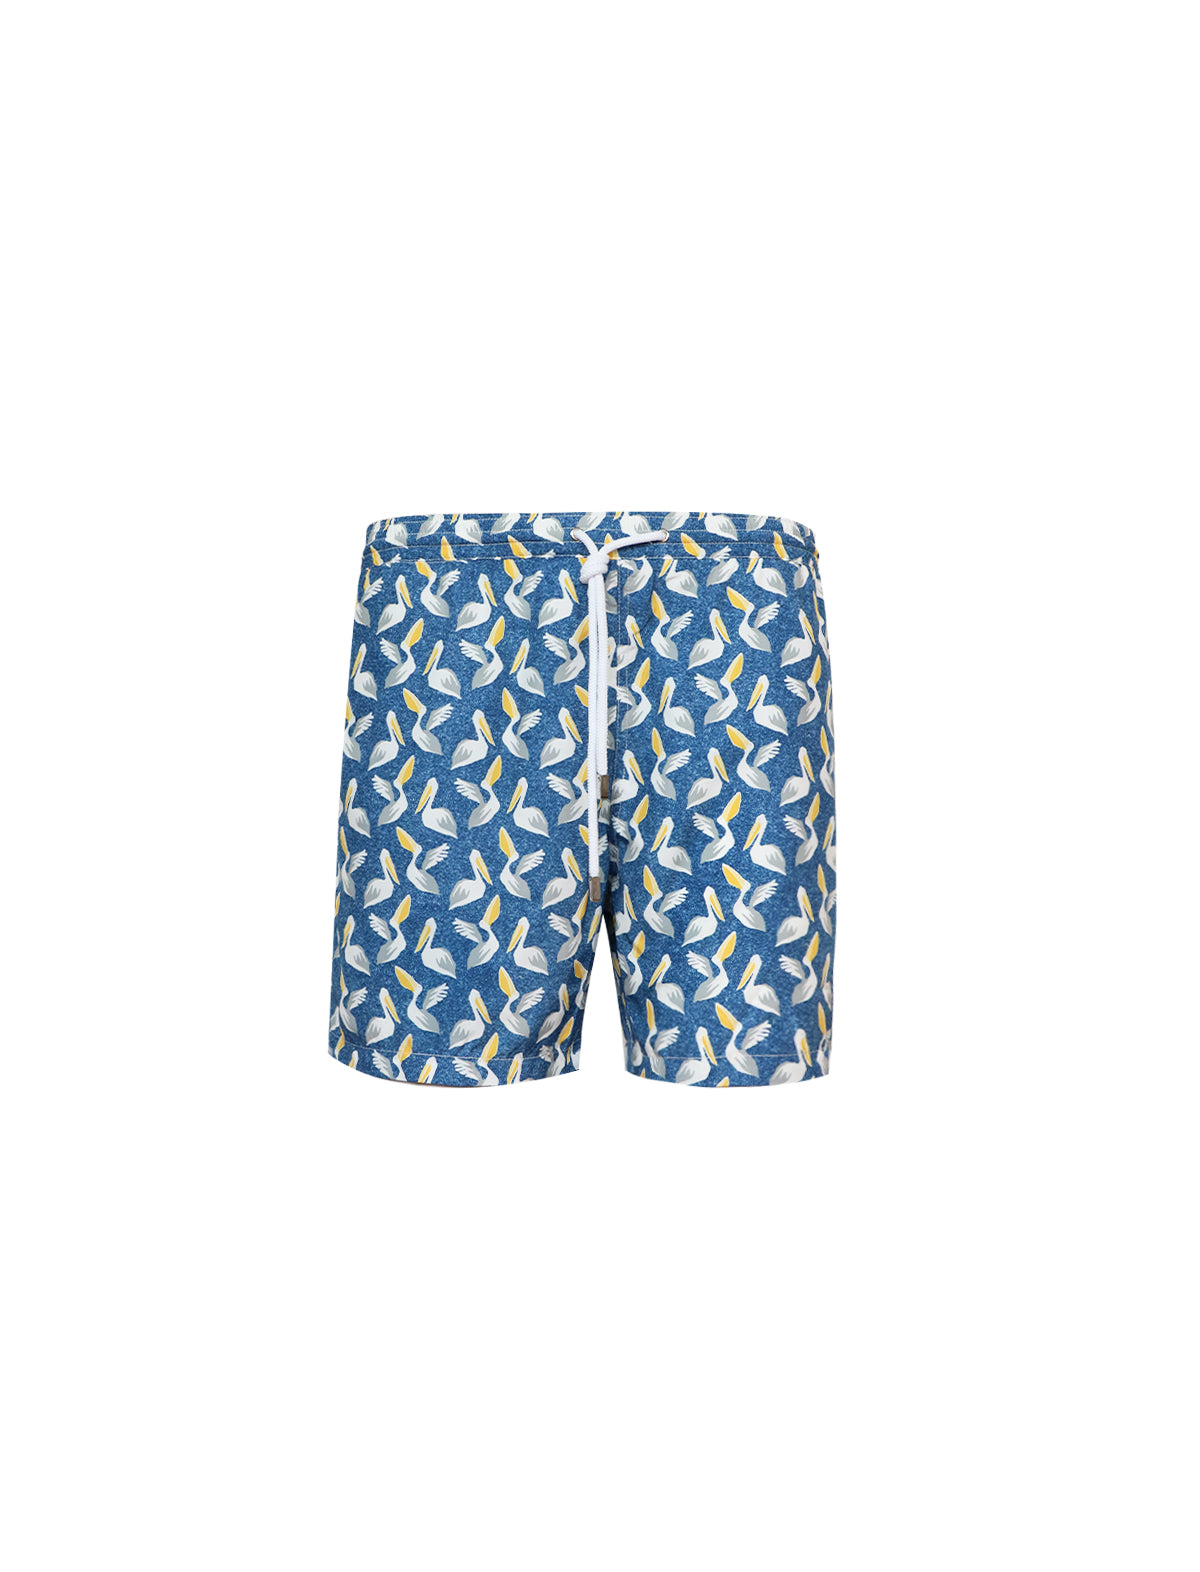 BARBA Napoli Swim Shorts in Blue Pelican Print